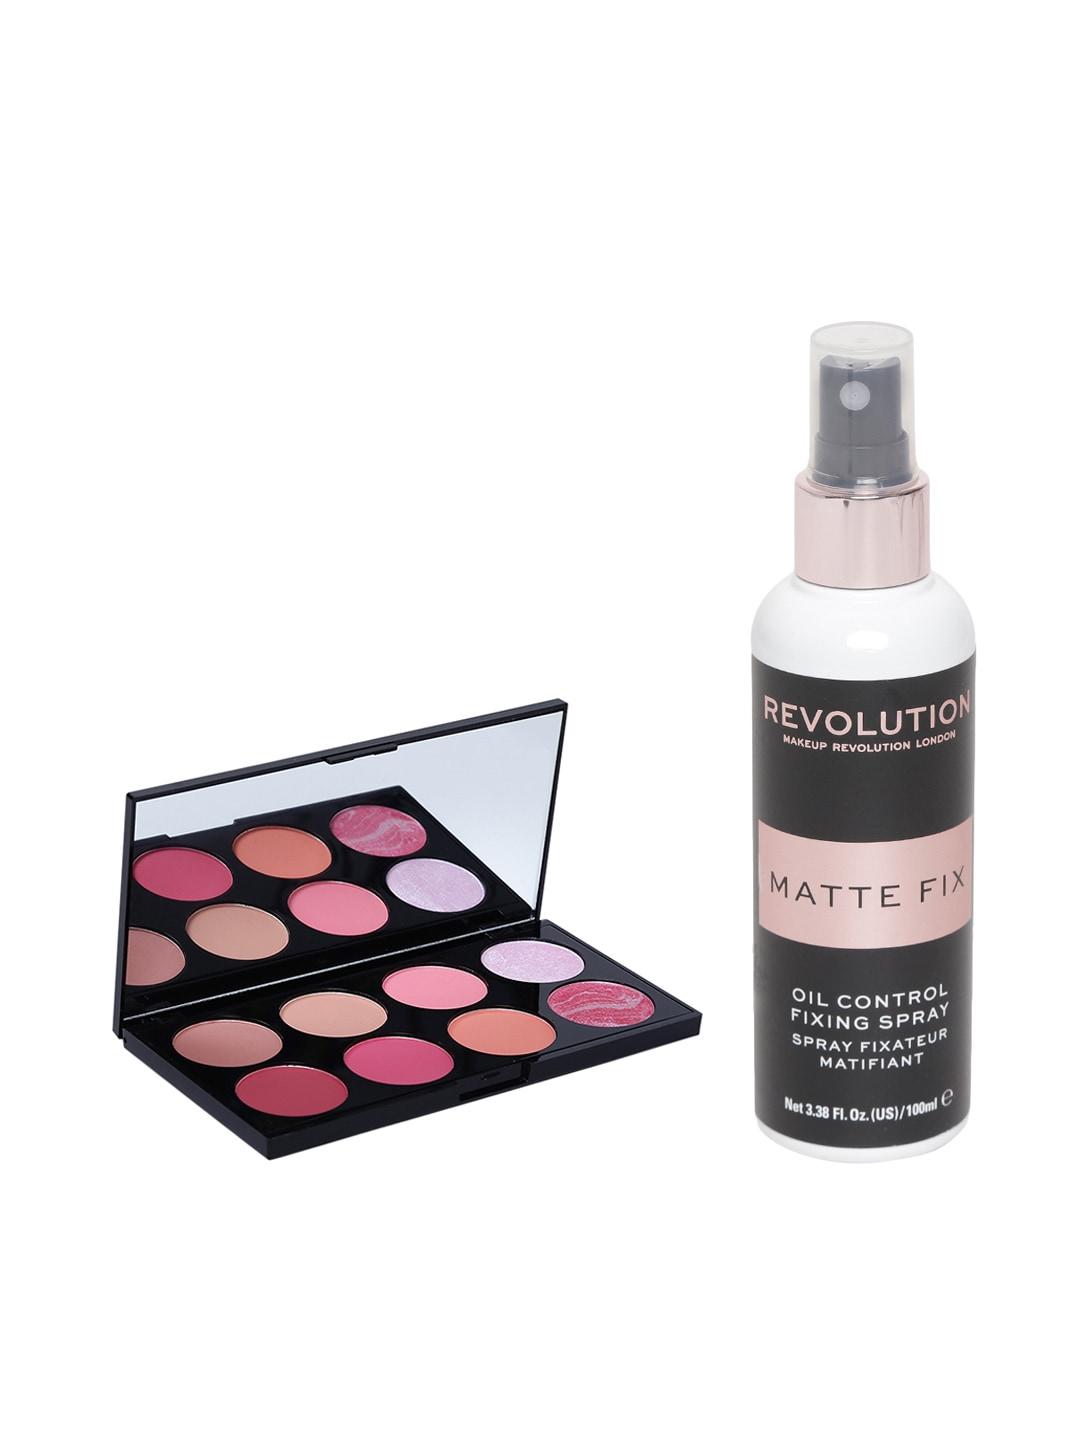 makeup revolution london set of blush palette & oil control fixing spray